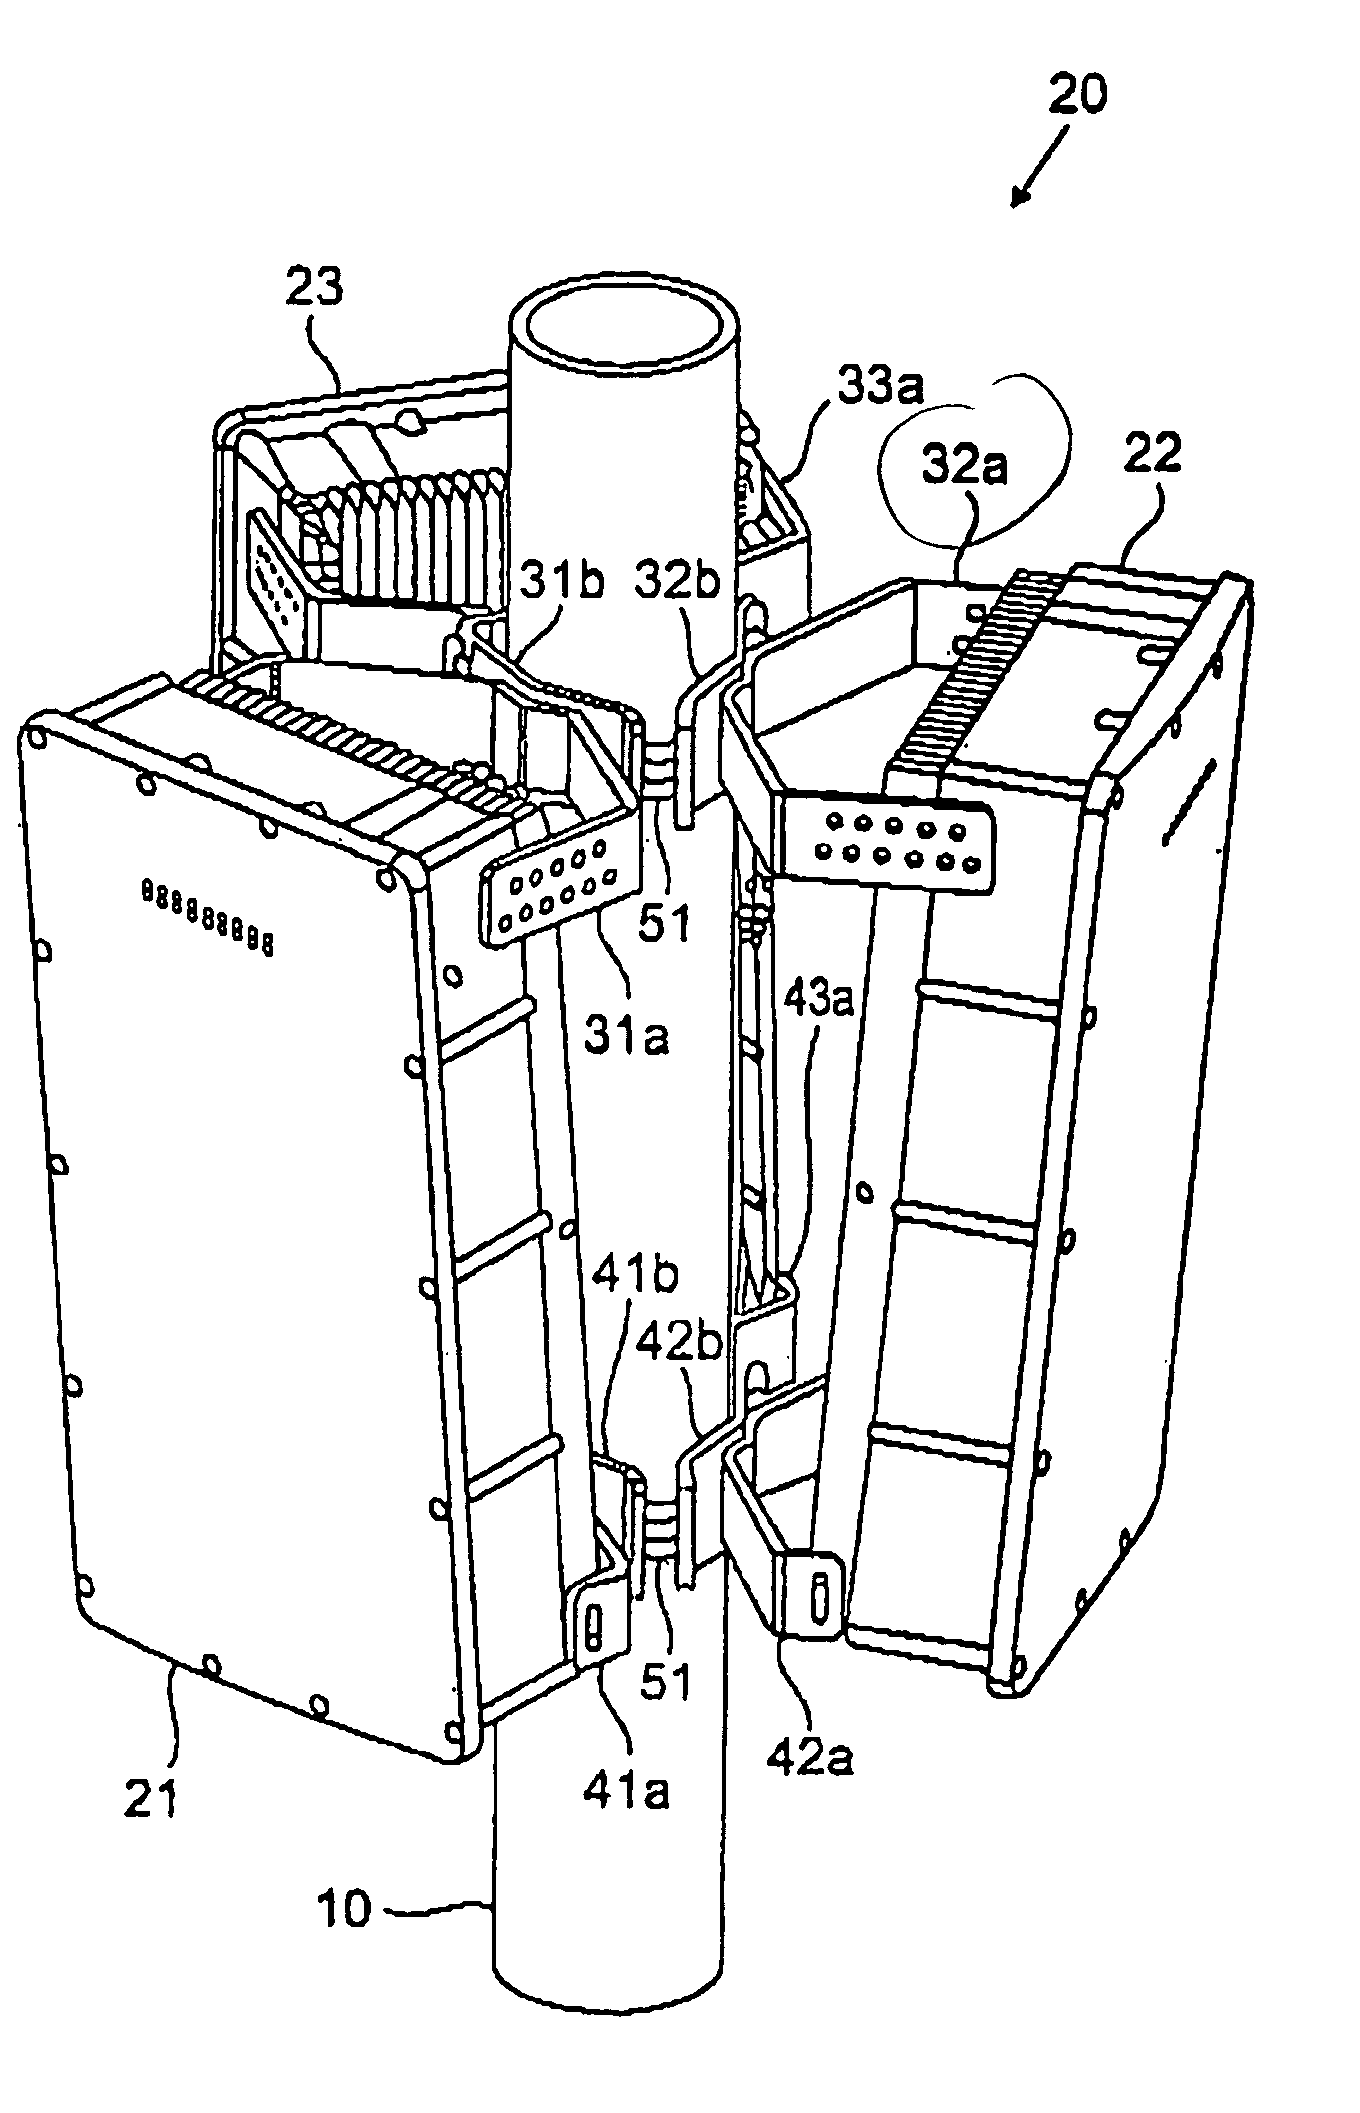 Antenna mounting apparatus